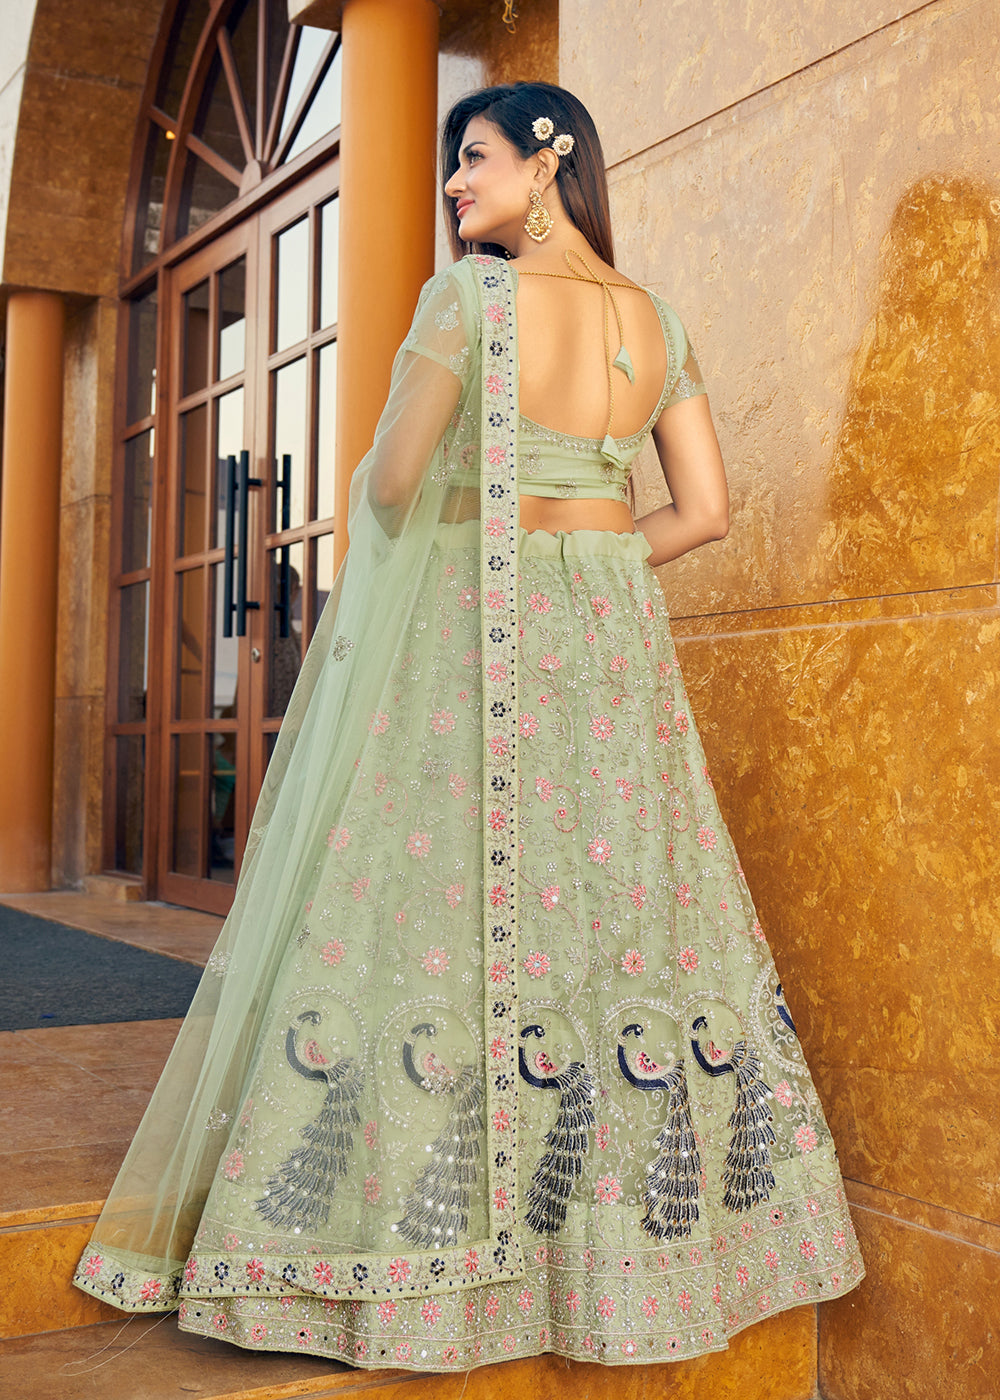 Buy Now Glamourous Mint Green Fancy Fabric Wedding Lehenga Choli Online in USA, UK, Canada & Worldwide at Empress Clothing. 